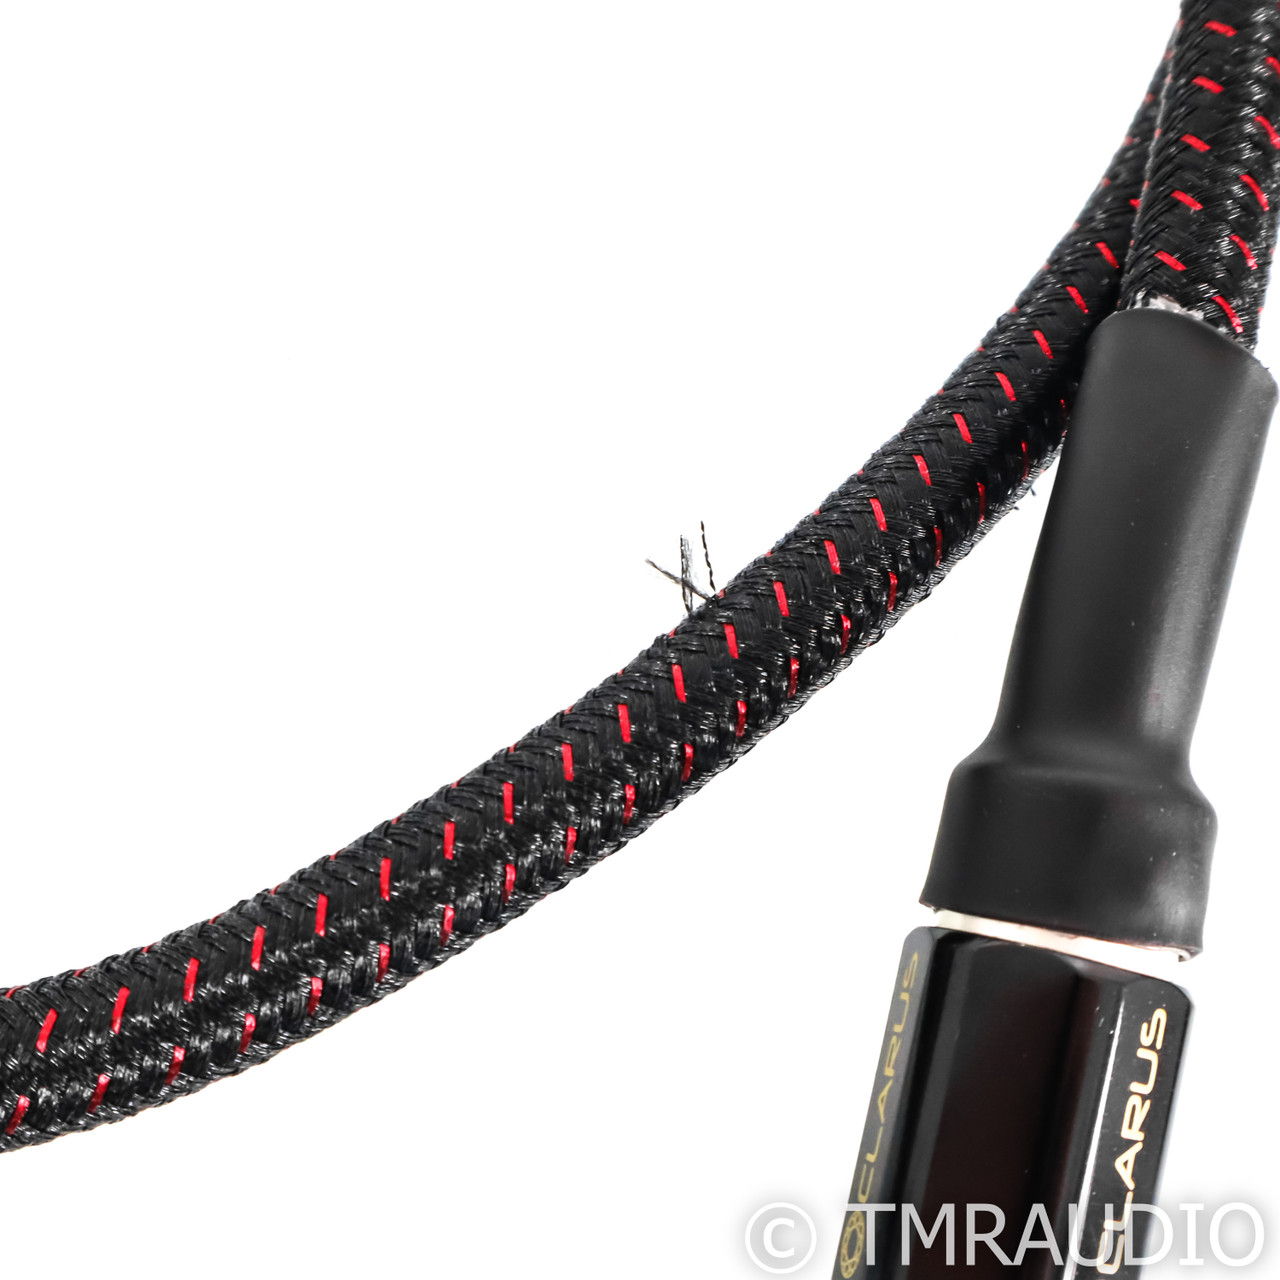 Clarus Cable Crimson XLR Cables; 1m Pair Balanced Inter... 5